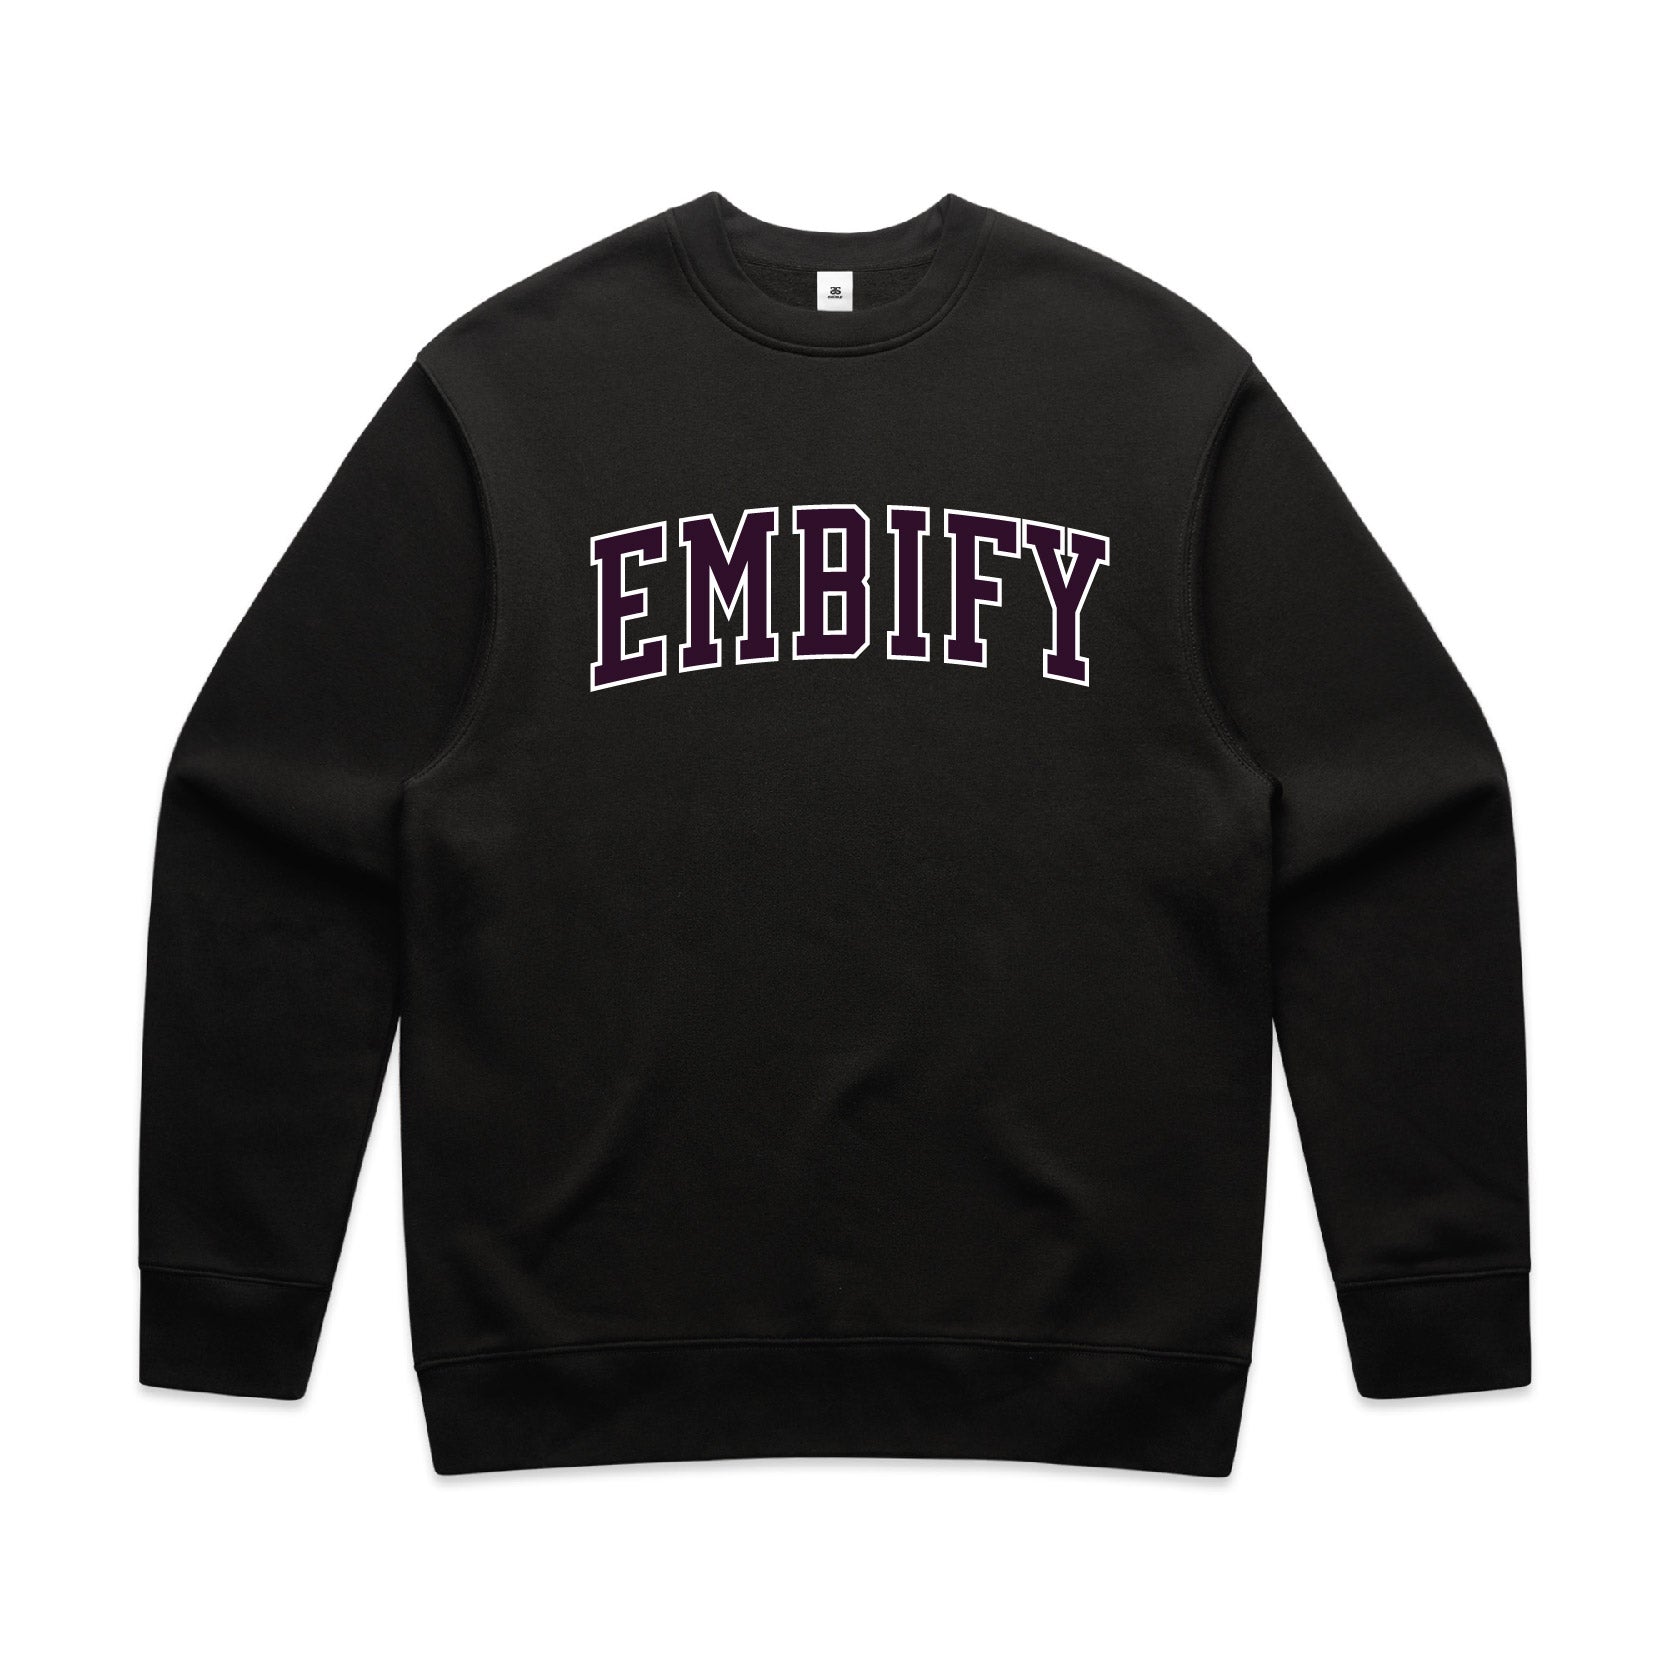 Embify Sweater